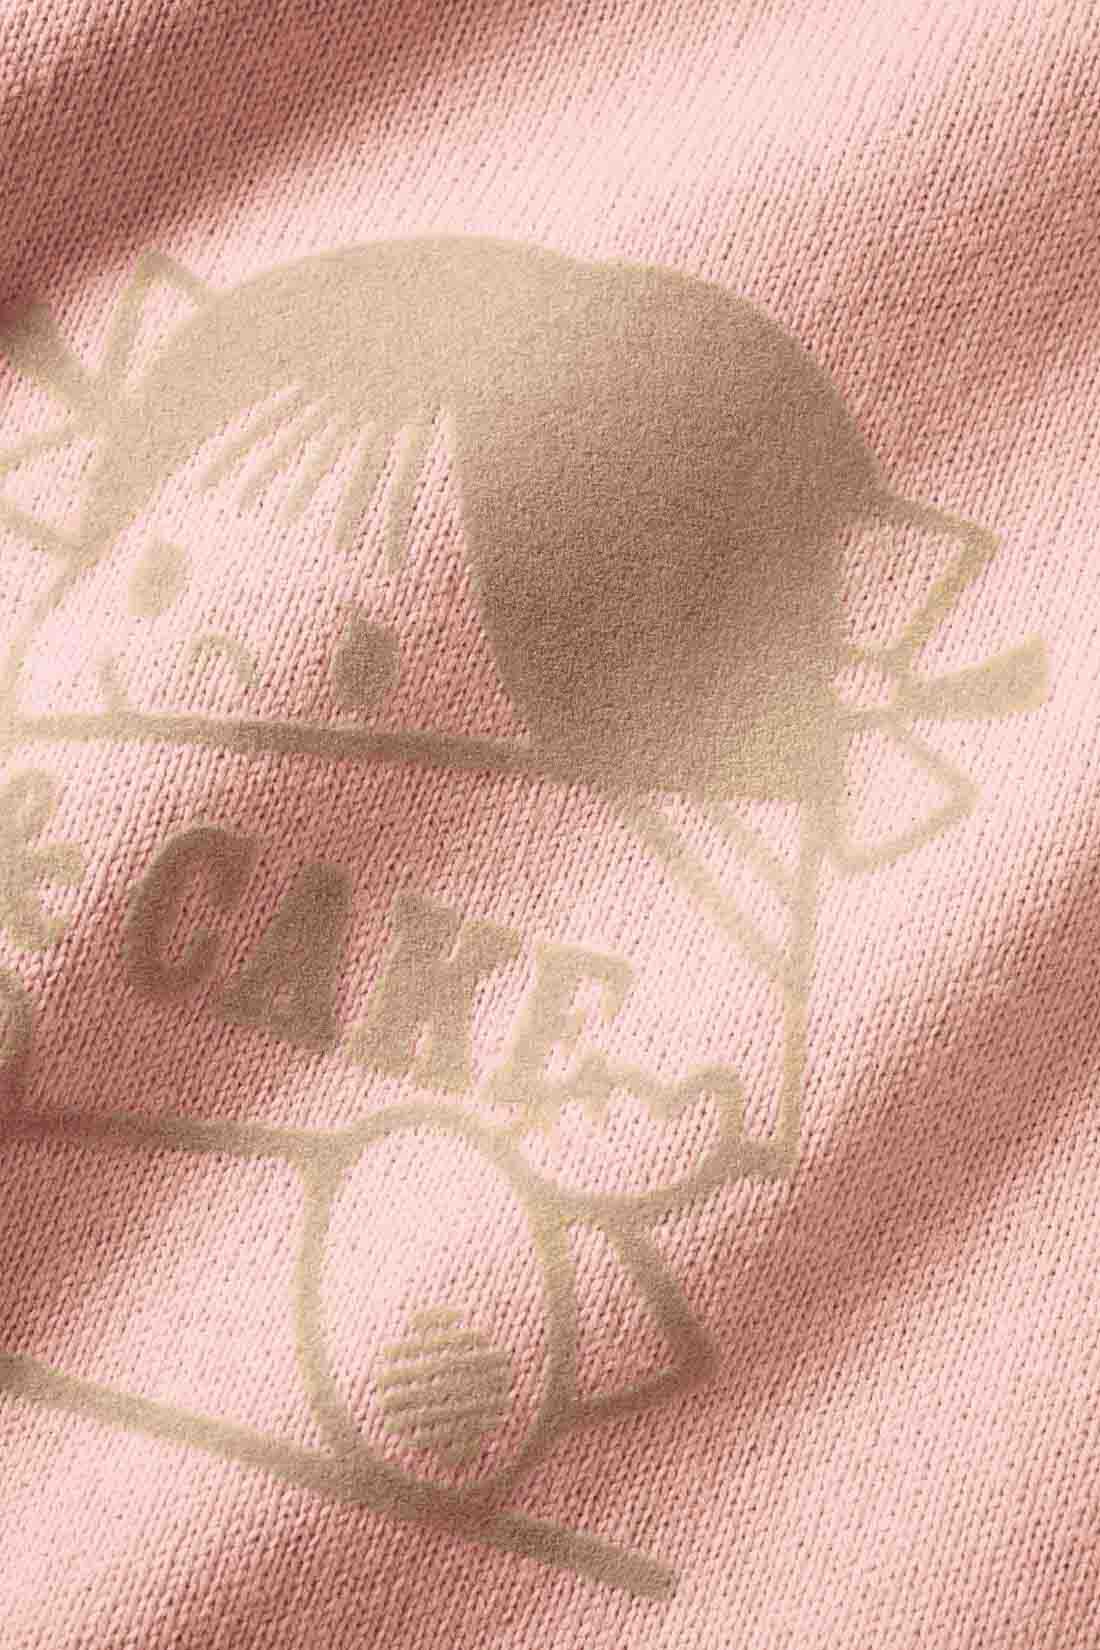 Live in  comfort|Live love cottonプロジェクト リブ イン コンフォート神戸のベーカリーハラダのパンさんとつくったオーガニックコットンのレトロかわいいTシャツ〈ベビーピンク〉|空紡糸を使用した厚みのある生地はオーガニックコットン100％！ フロントのフロッキープリントがおしゃれ。※お届けするカラーとは異なります。